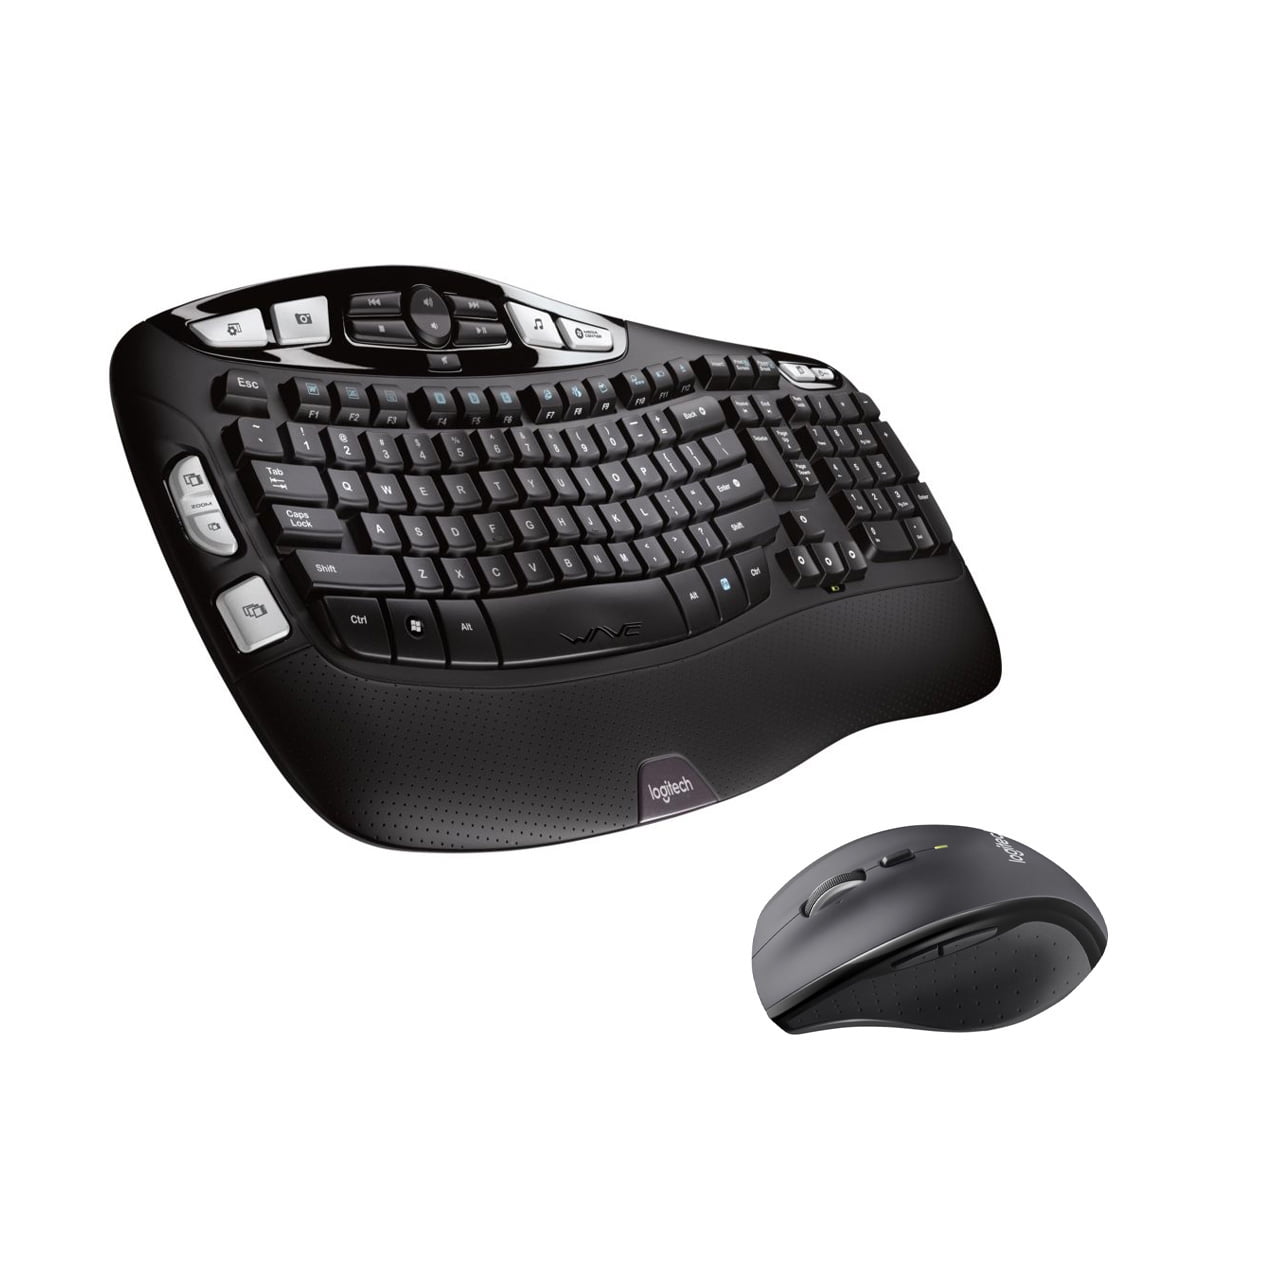 Logitech Wave Keys Wireless Ergonomic Keyboard with Cushioned Palm Rest,  Off-white - clavier - avec repose-paume rembourré - blanc cassé